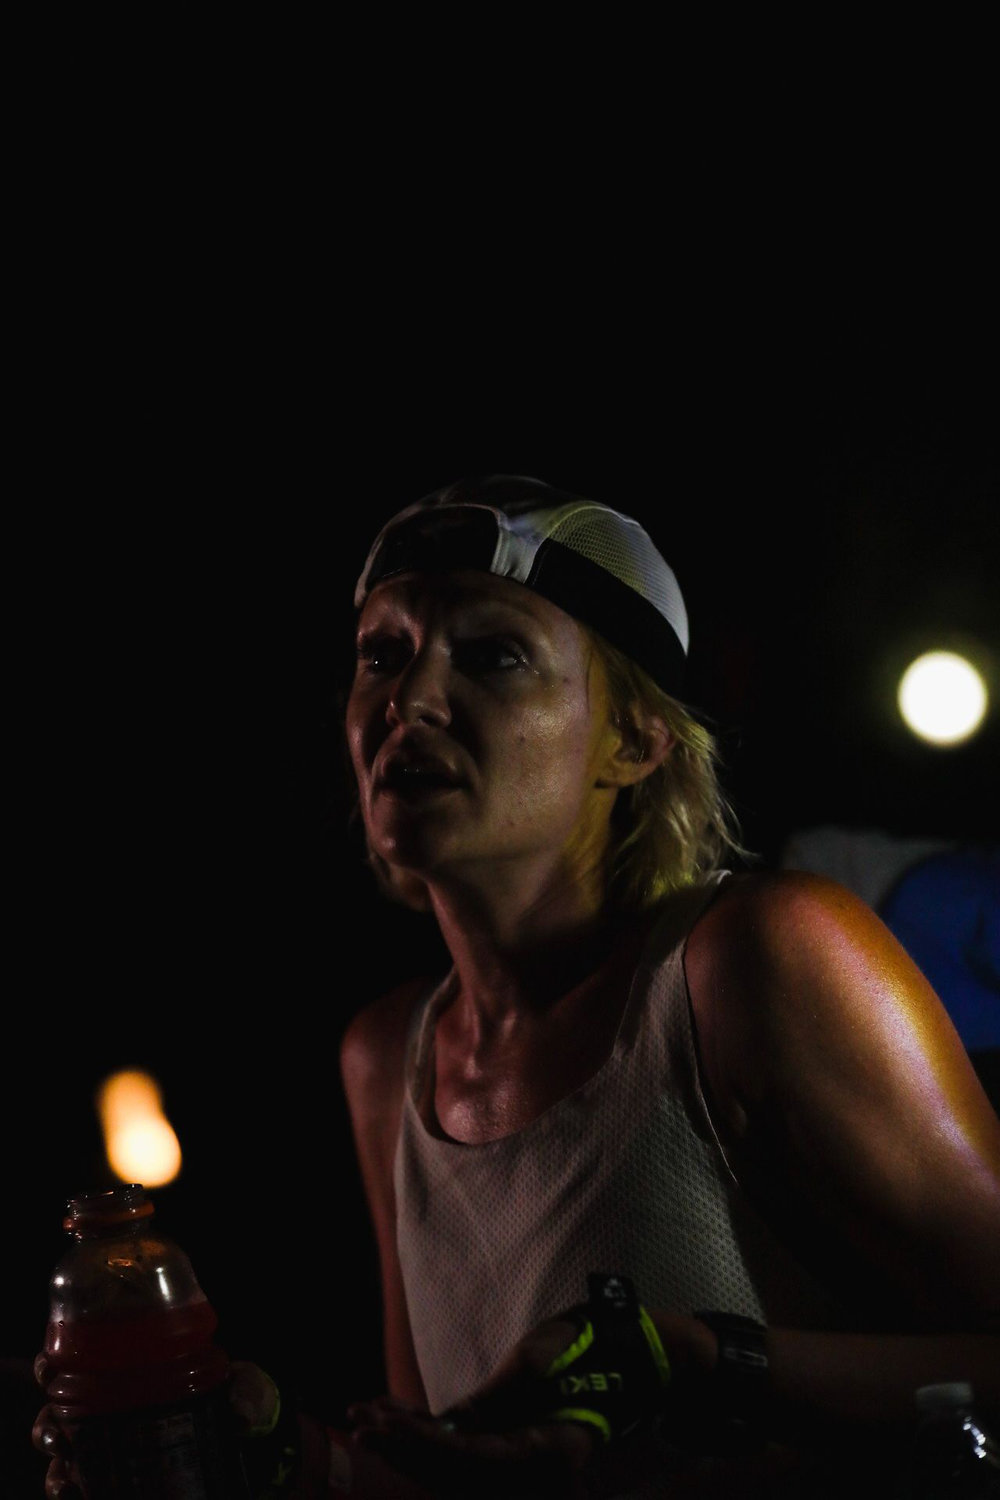 Sabrina Stanley runs through the night during the Hardrock 100 ultramarathon on July 17 near Silverton, Colorado.